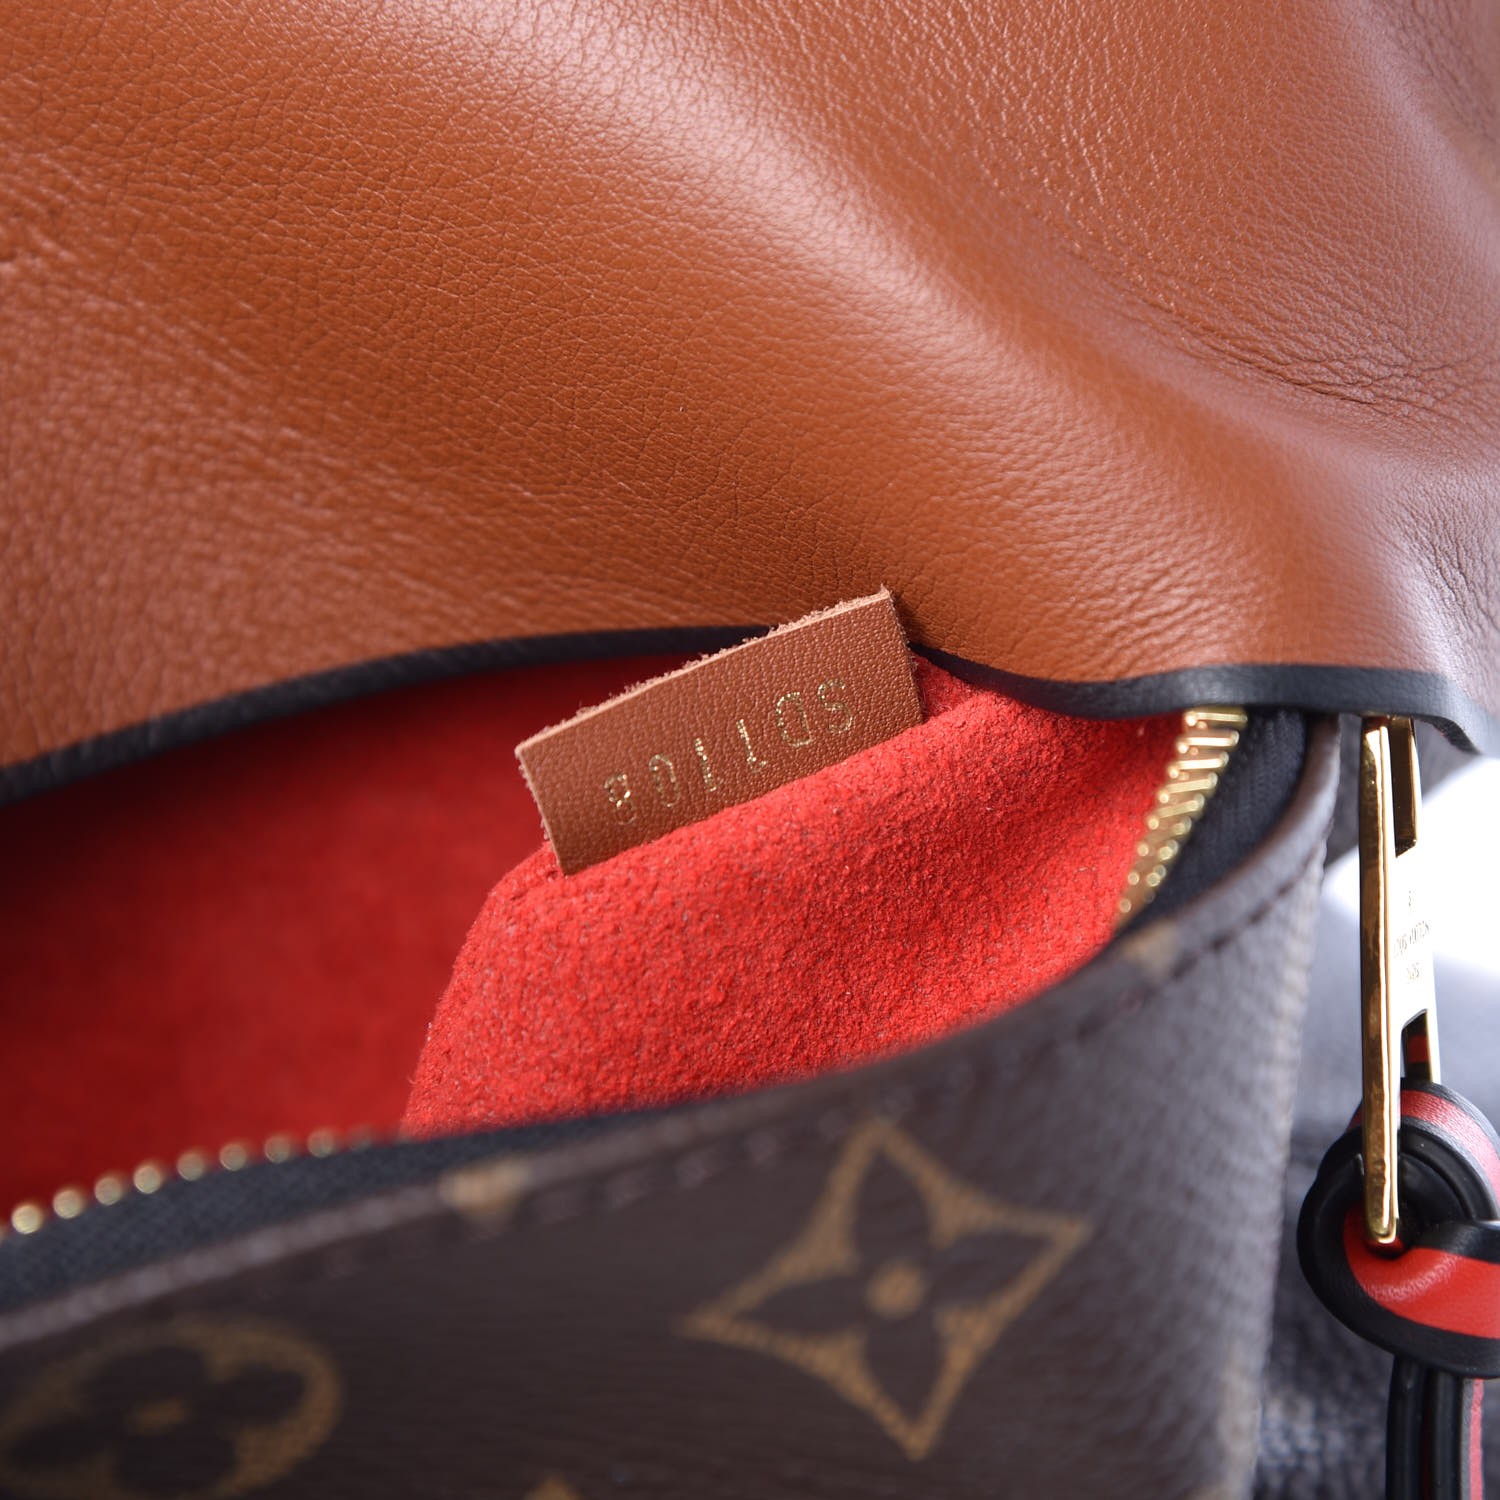 Louis Vuitton Monogram Canvas Caramel Rouge Tuileries Besace Bag